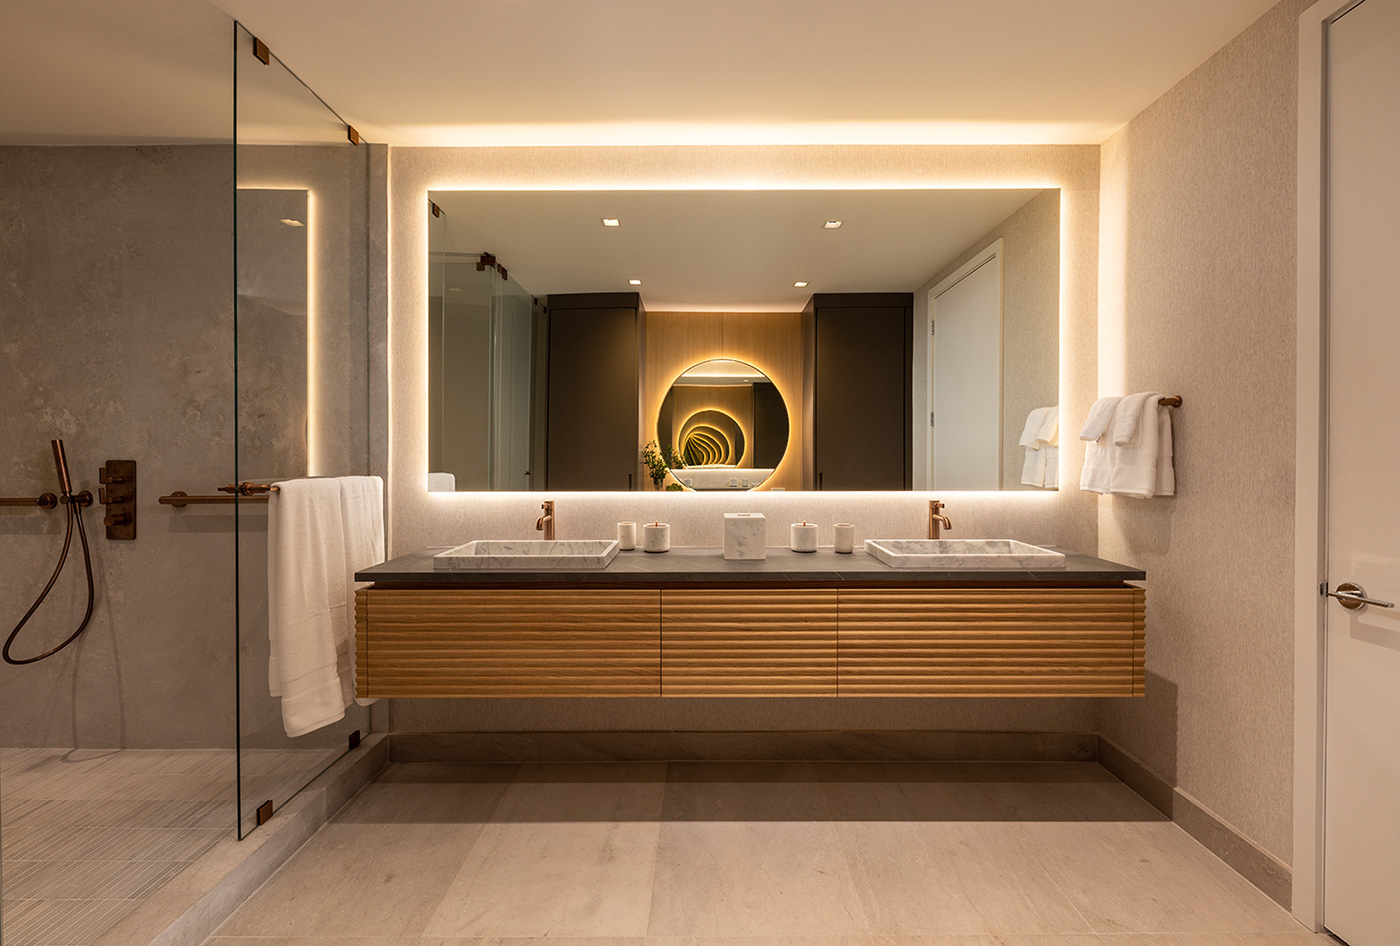 design architecture interior design  Luxury Design bathroom bedroom kitchen modern living room